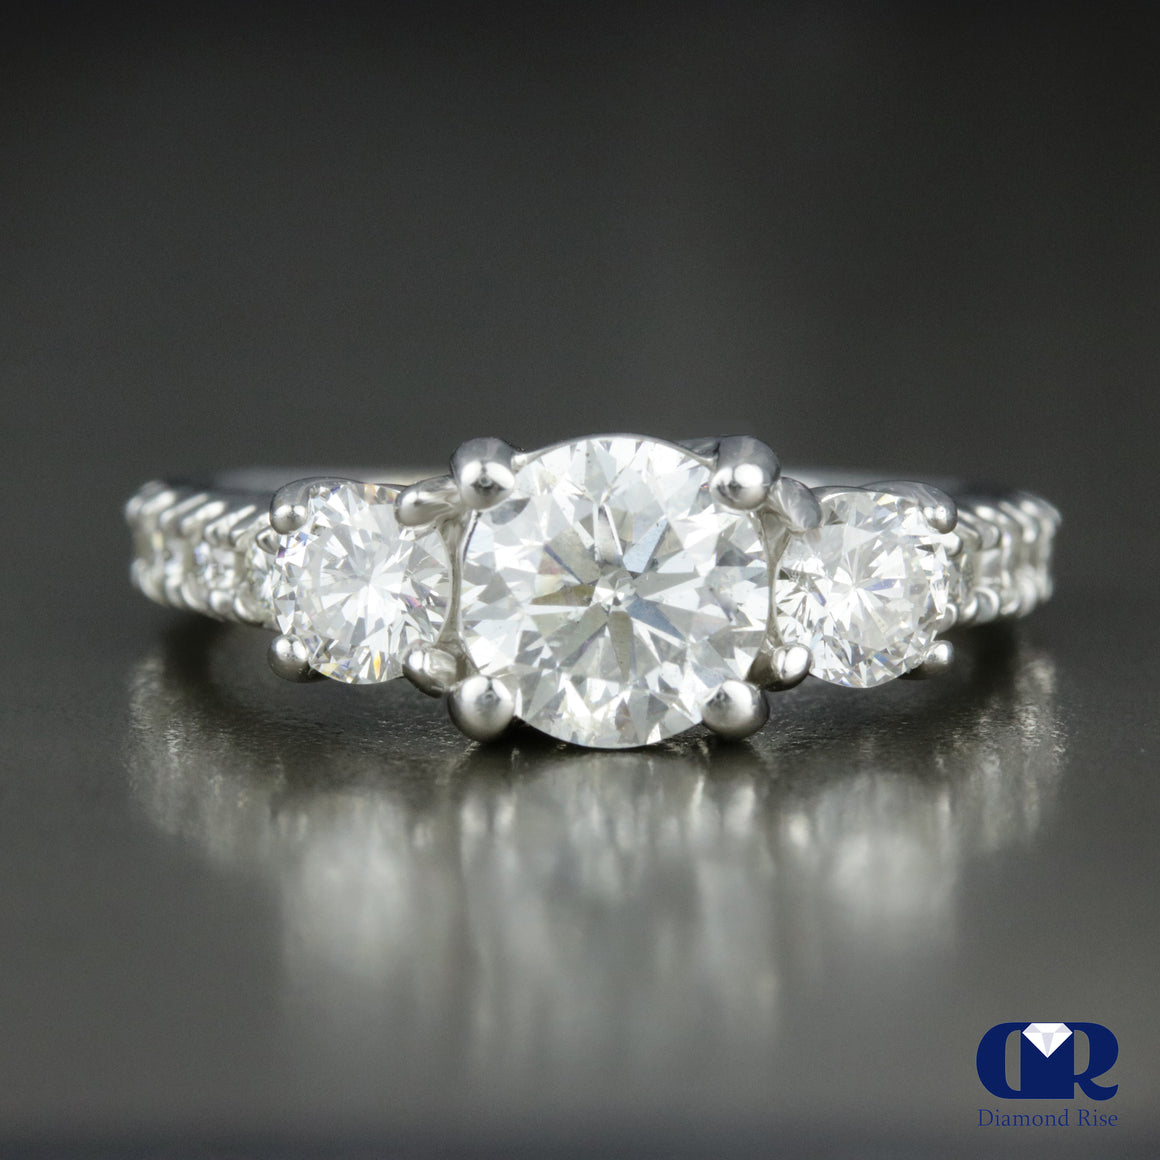 1.82 Carat Round Cut Diamond Three Stone Engagement Ring In 14K White Gold - Diamond Rise Jewelry